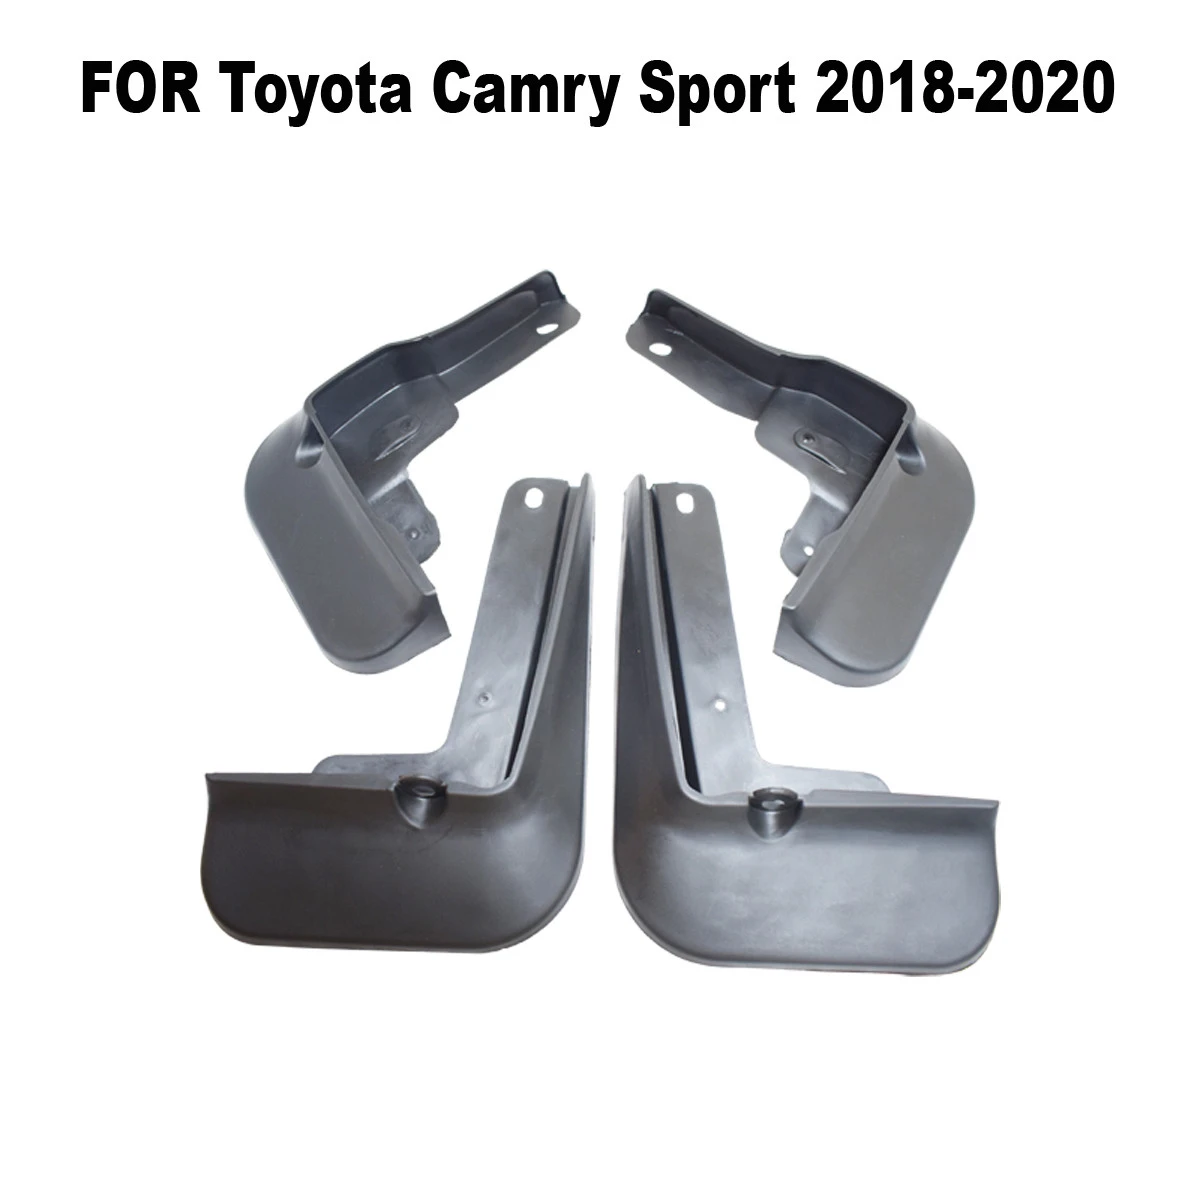 Car Fender Mudguards Mud Flap Splash Guards For Toyota Camry 55 2003 2012 -2019